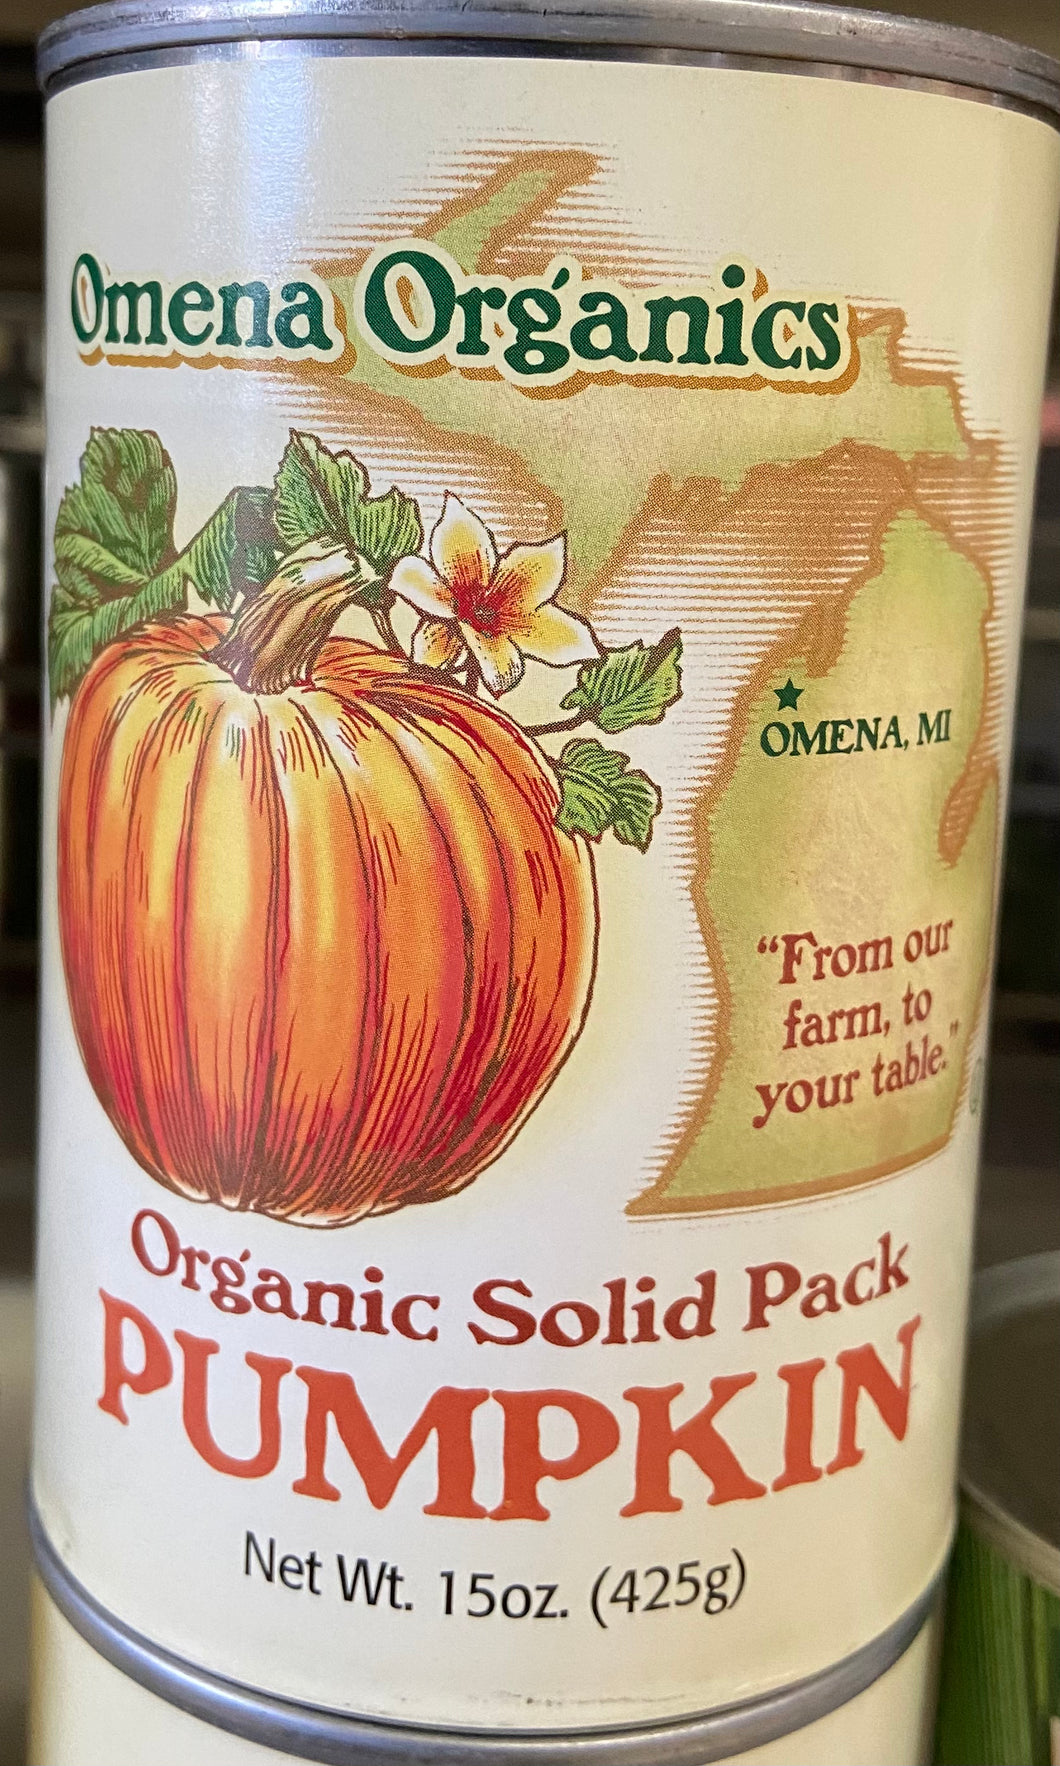 Pumpkin, Canned Organic, Solid Pack, Omena's Organic